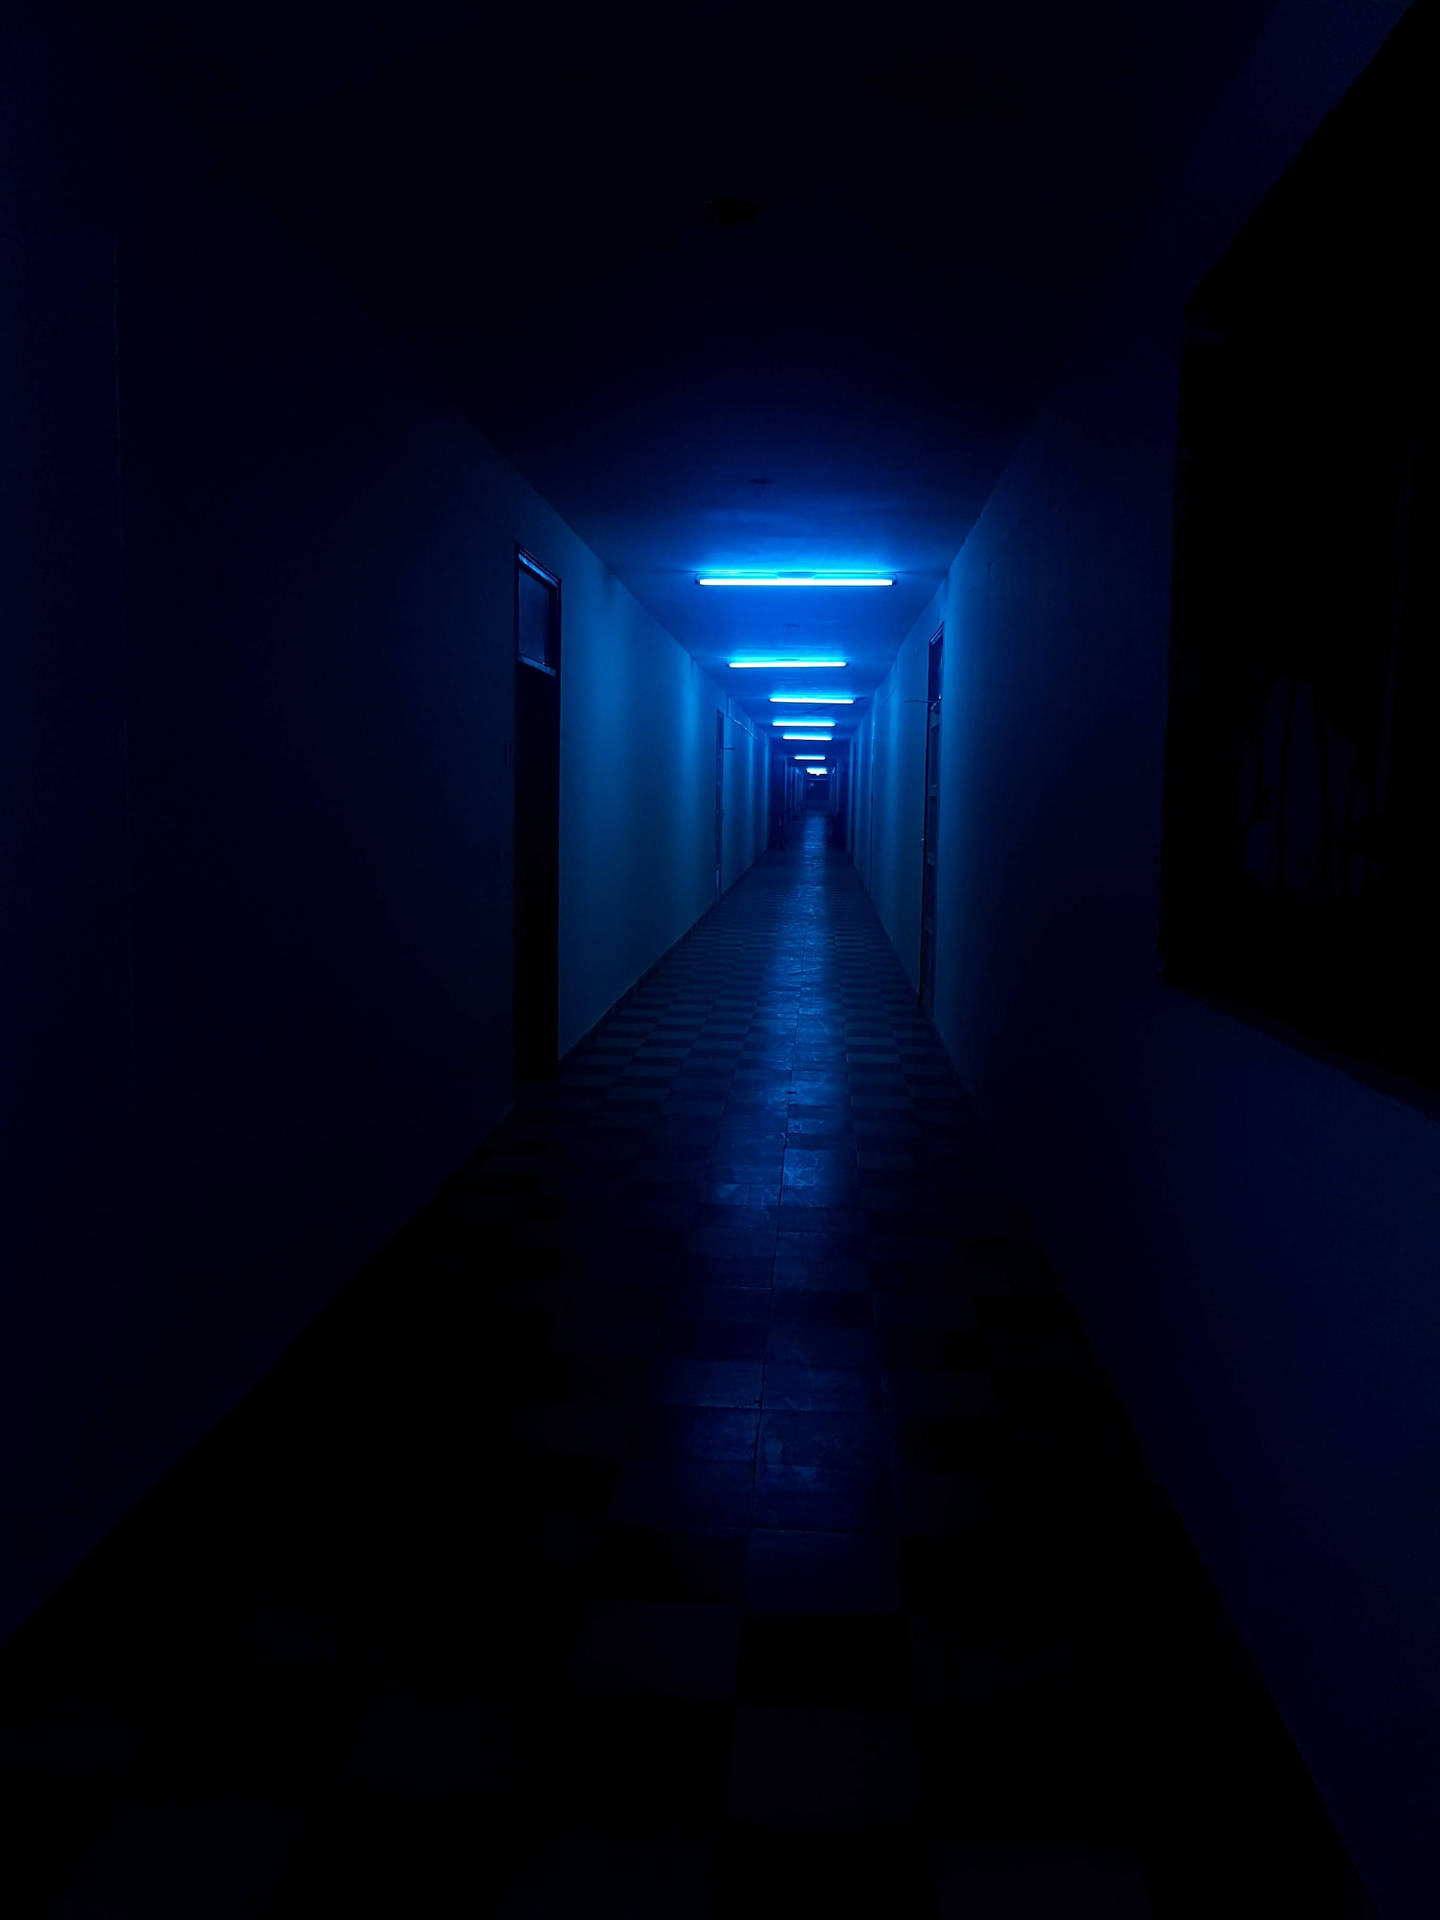 Hallway Glowing In Neon Blue iPhone Wallpaper